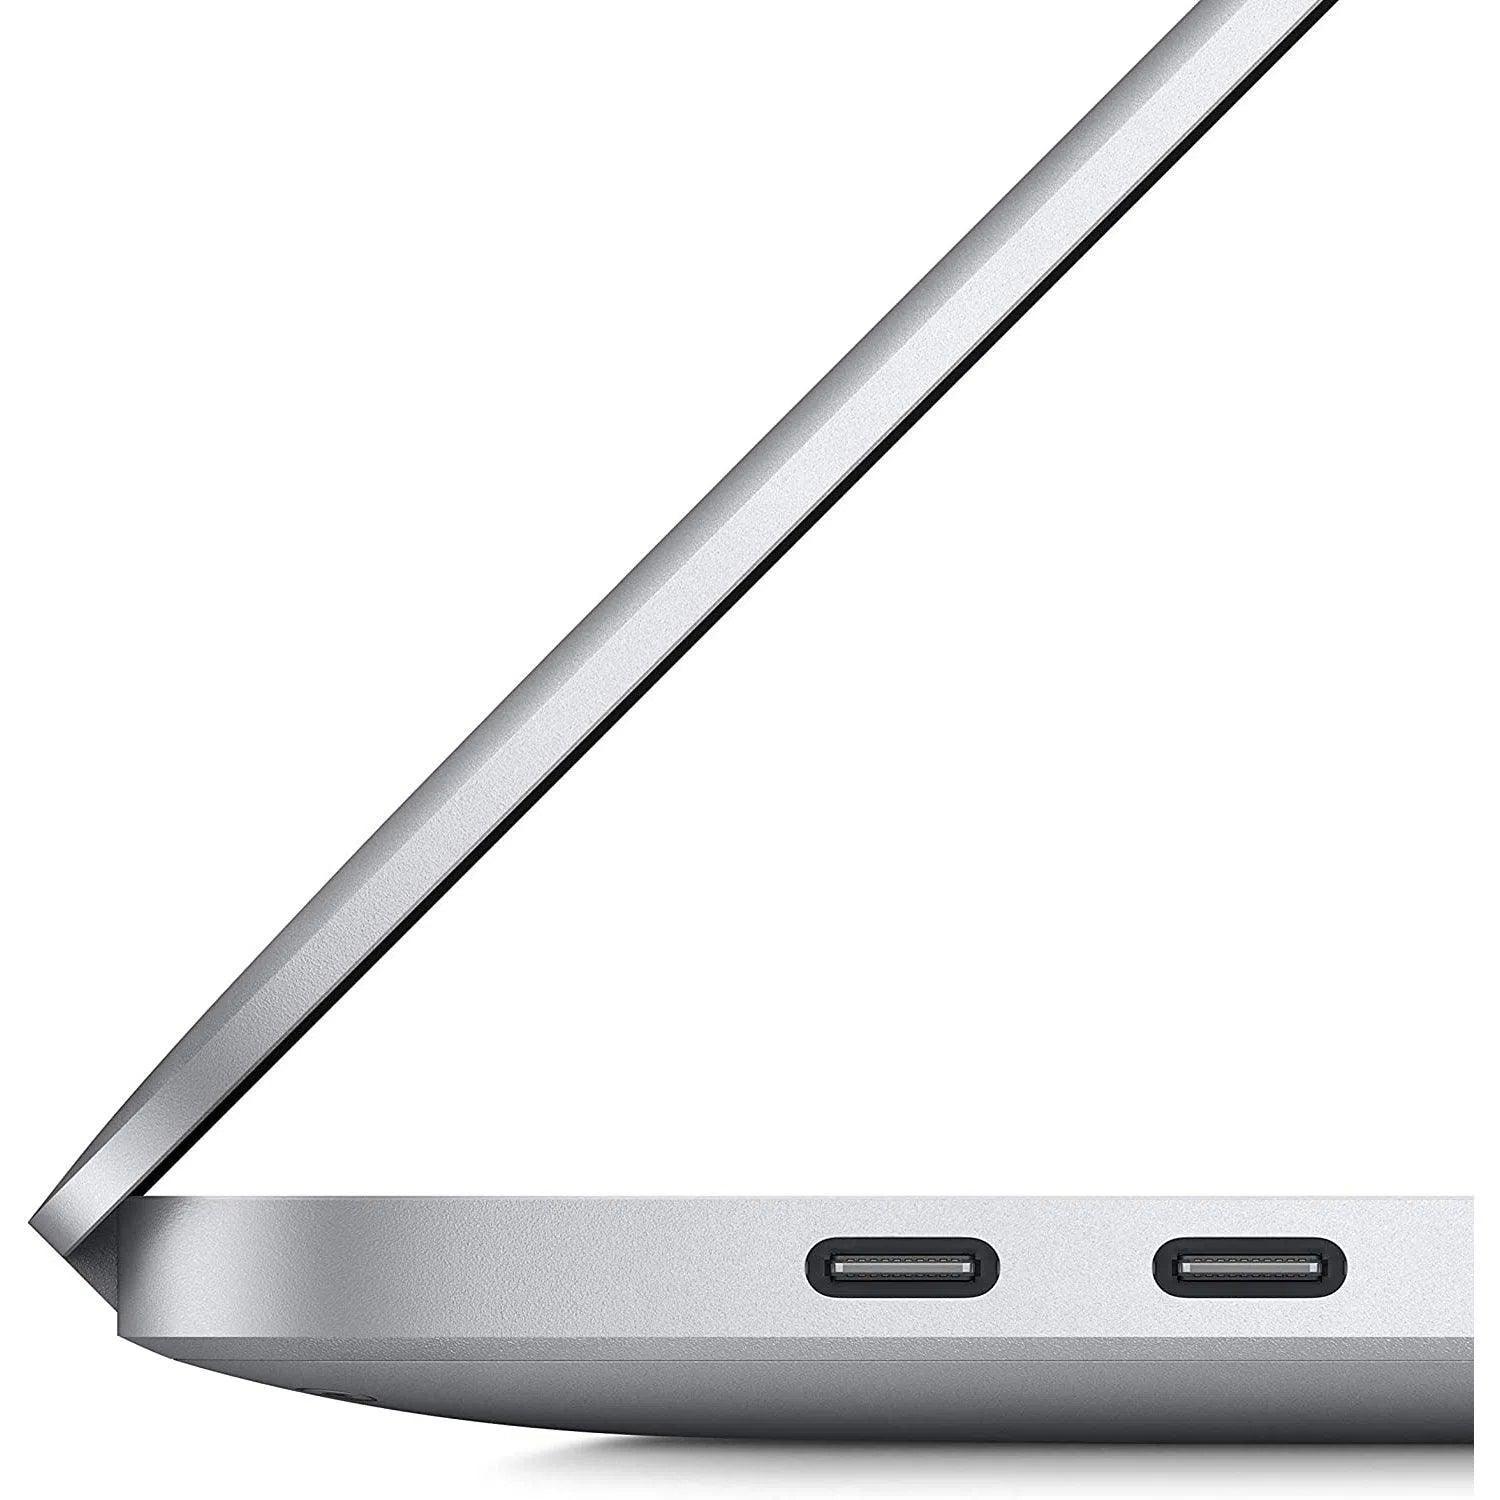 Macbook Pro 16-inch A2141 Core i9 2.6Ghz (2019) - TIO